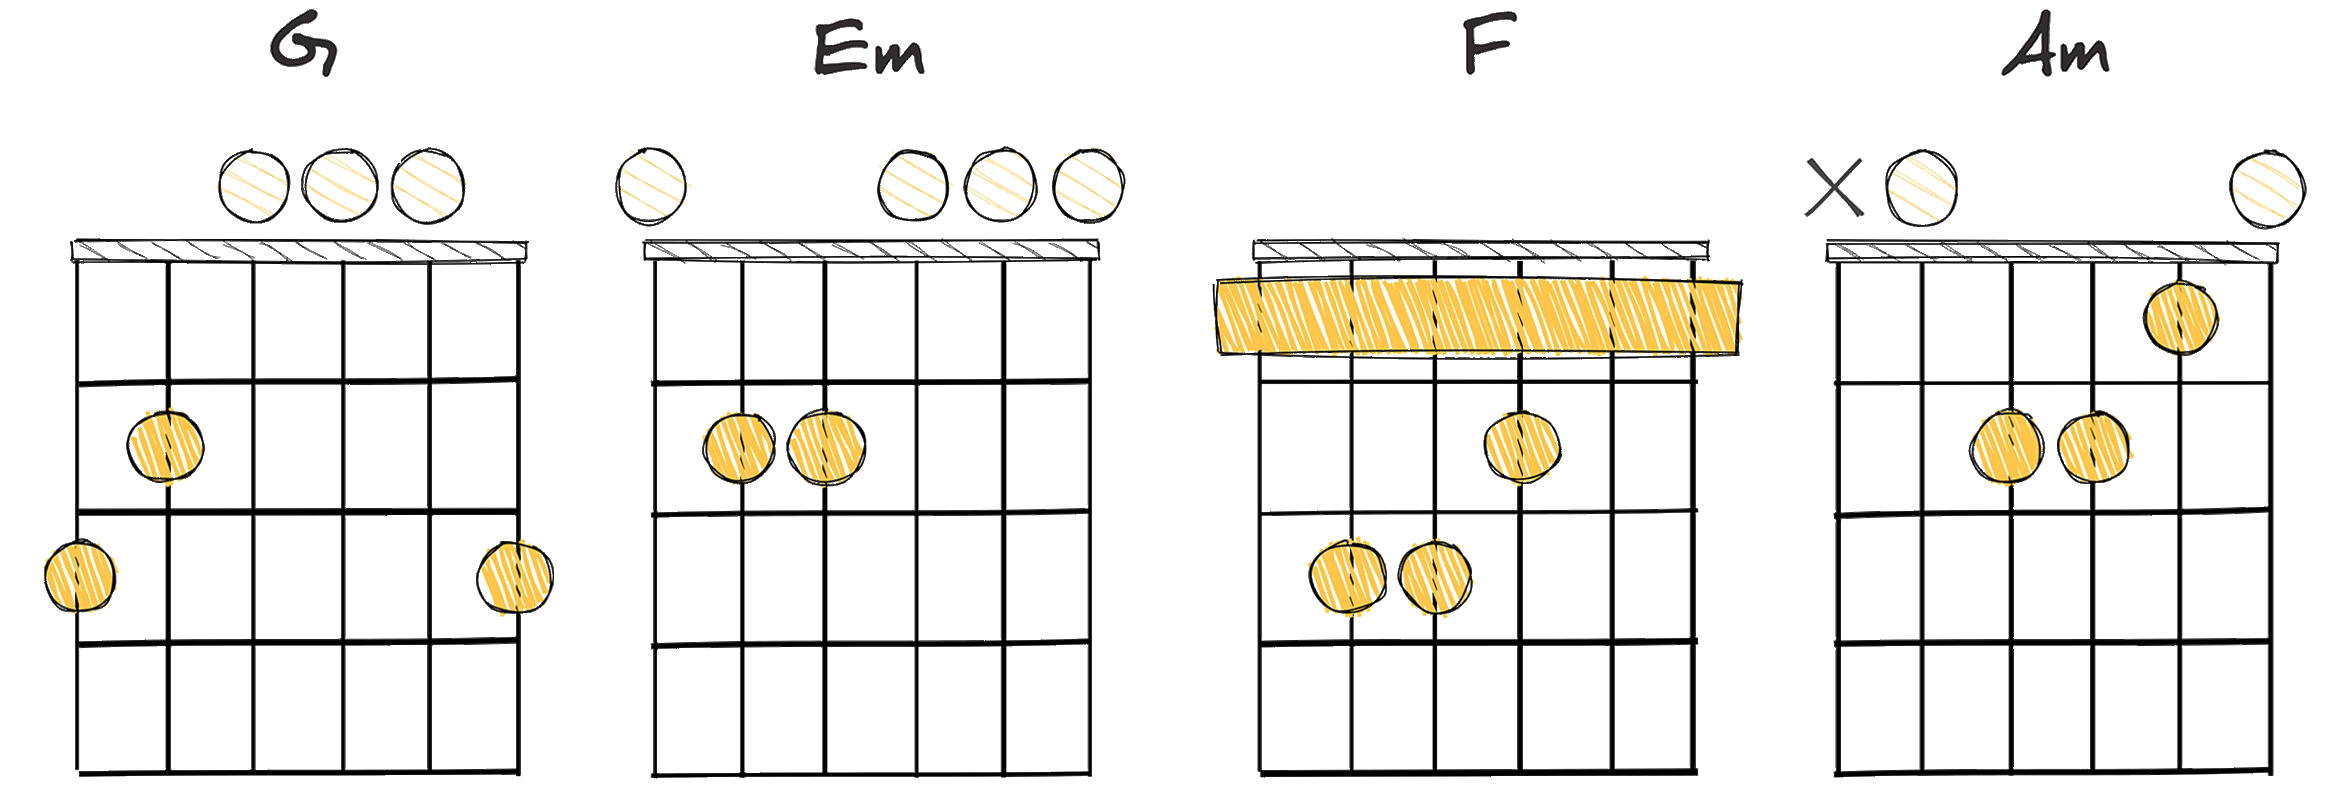 V – iii – IV – vi (5 – 3 – 4 – 6) chords diagram